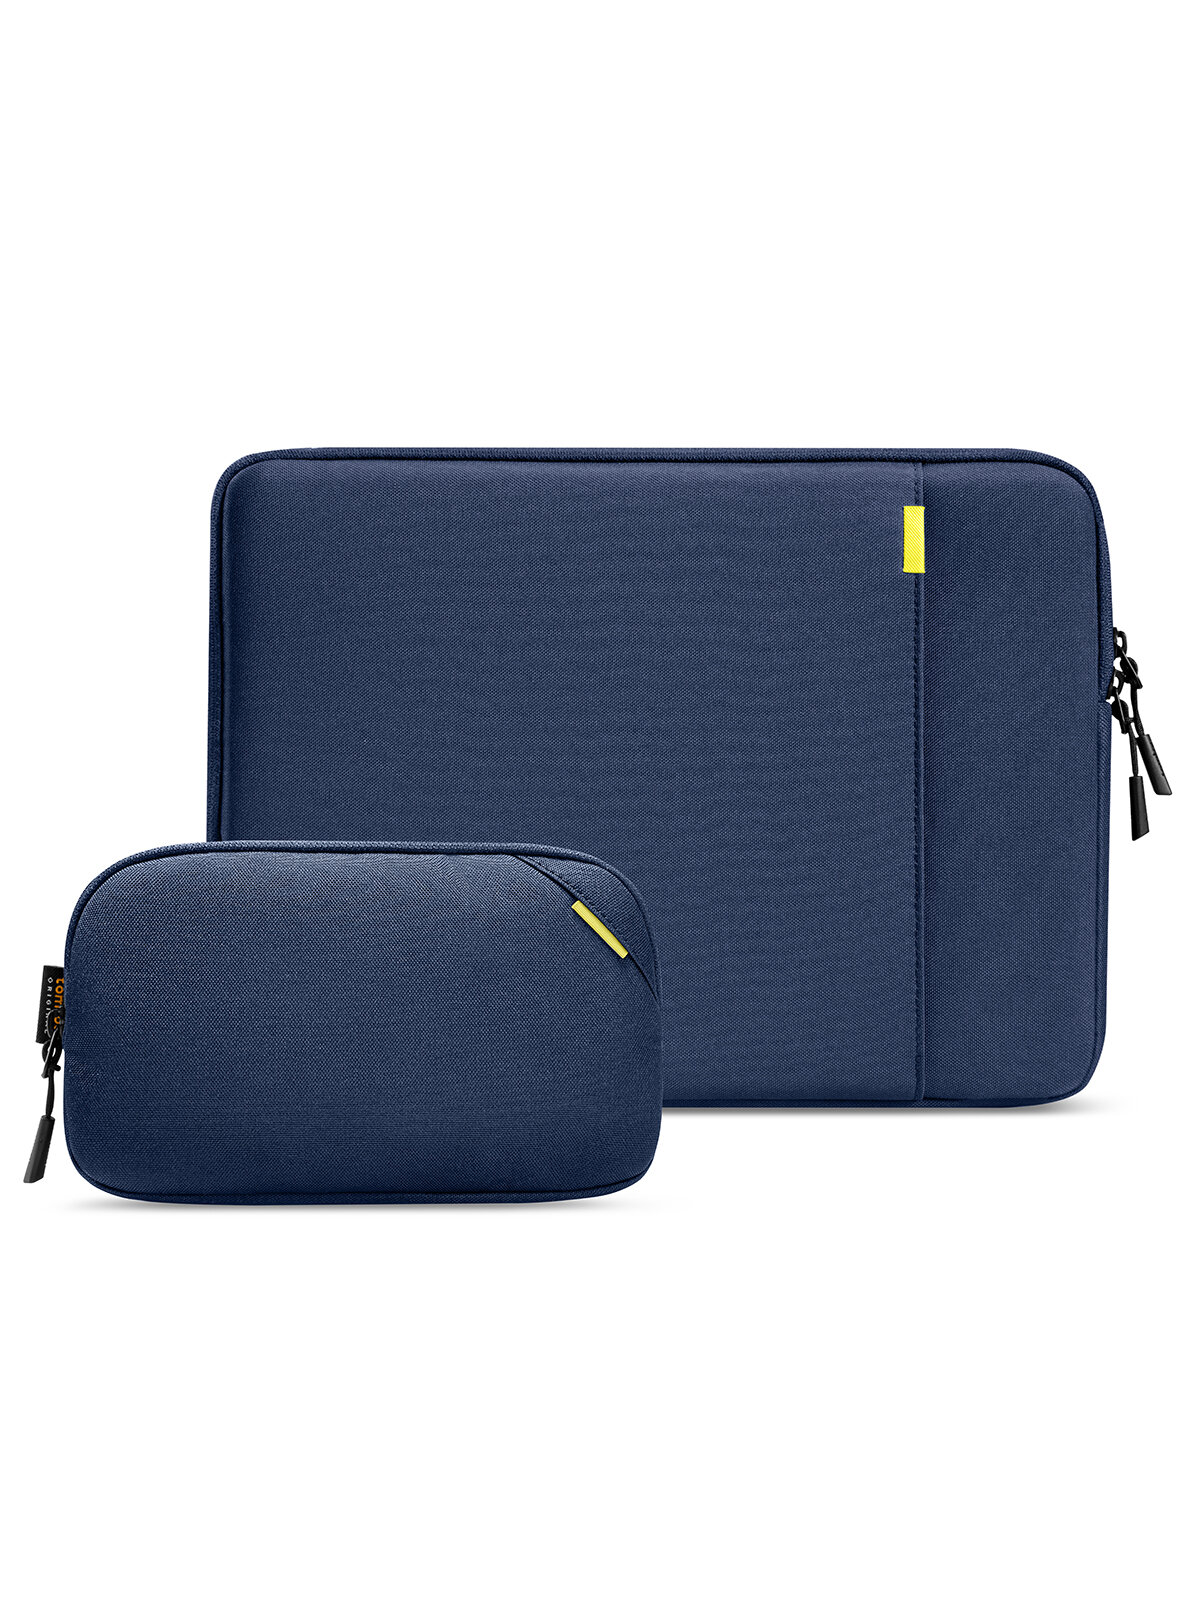 Tomtoc Laptop сумочка для аксессуаров Defender-A13 Accessories Pouch 8" Navy Blue